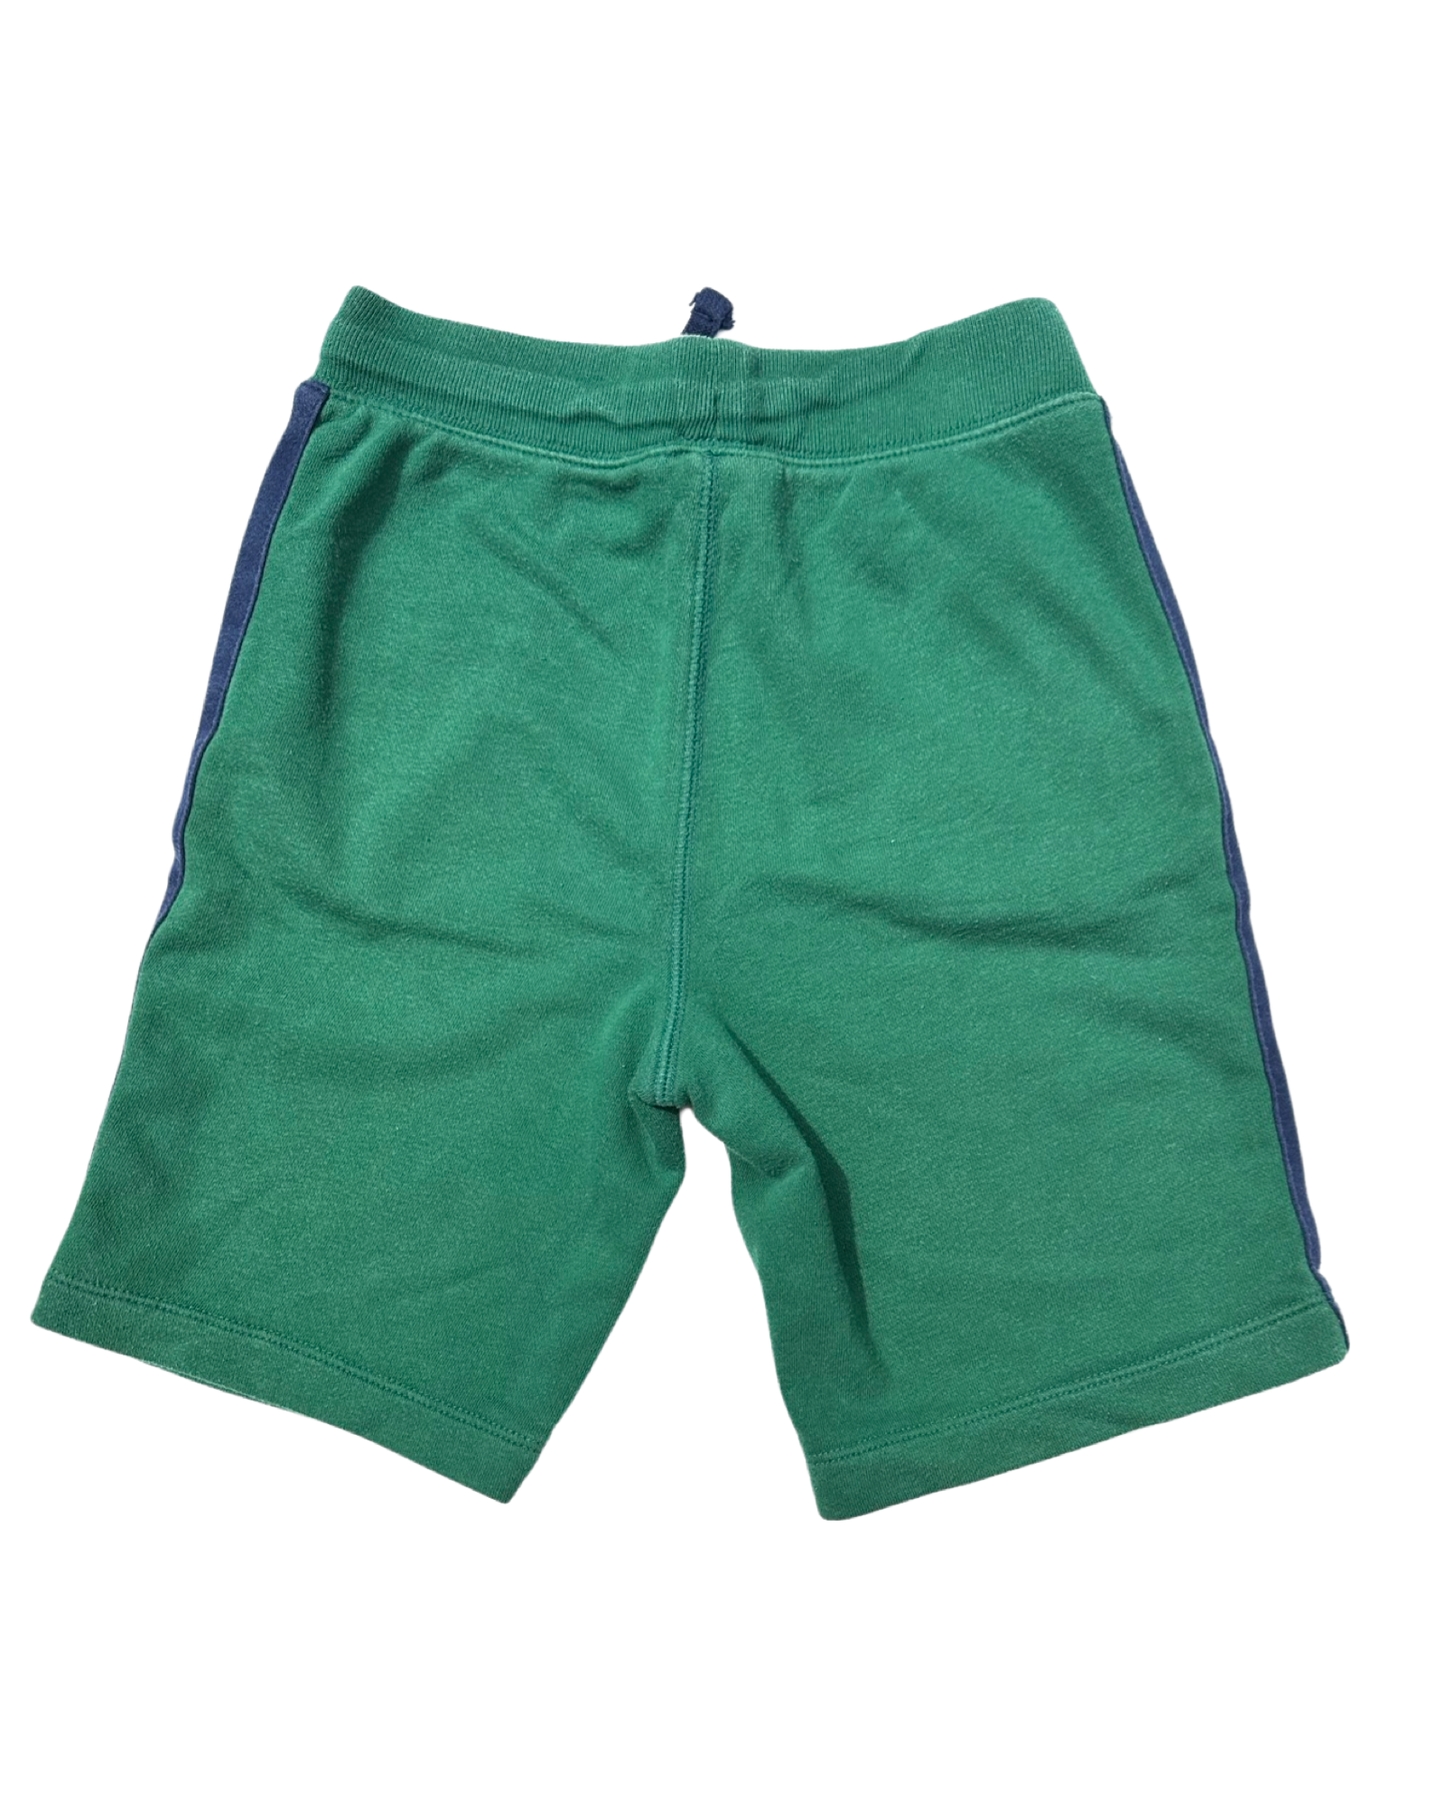 Gap Kids green jersey shorts (size 8-9yrs)